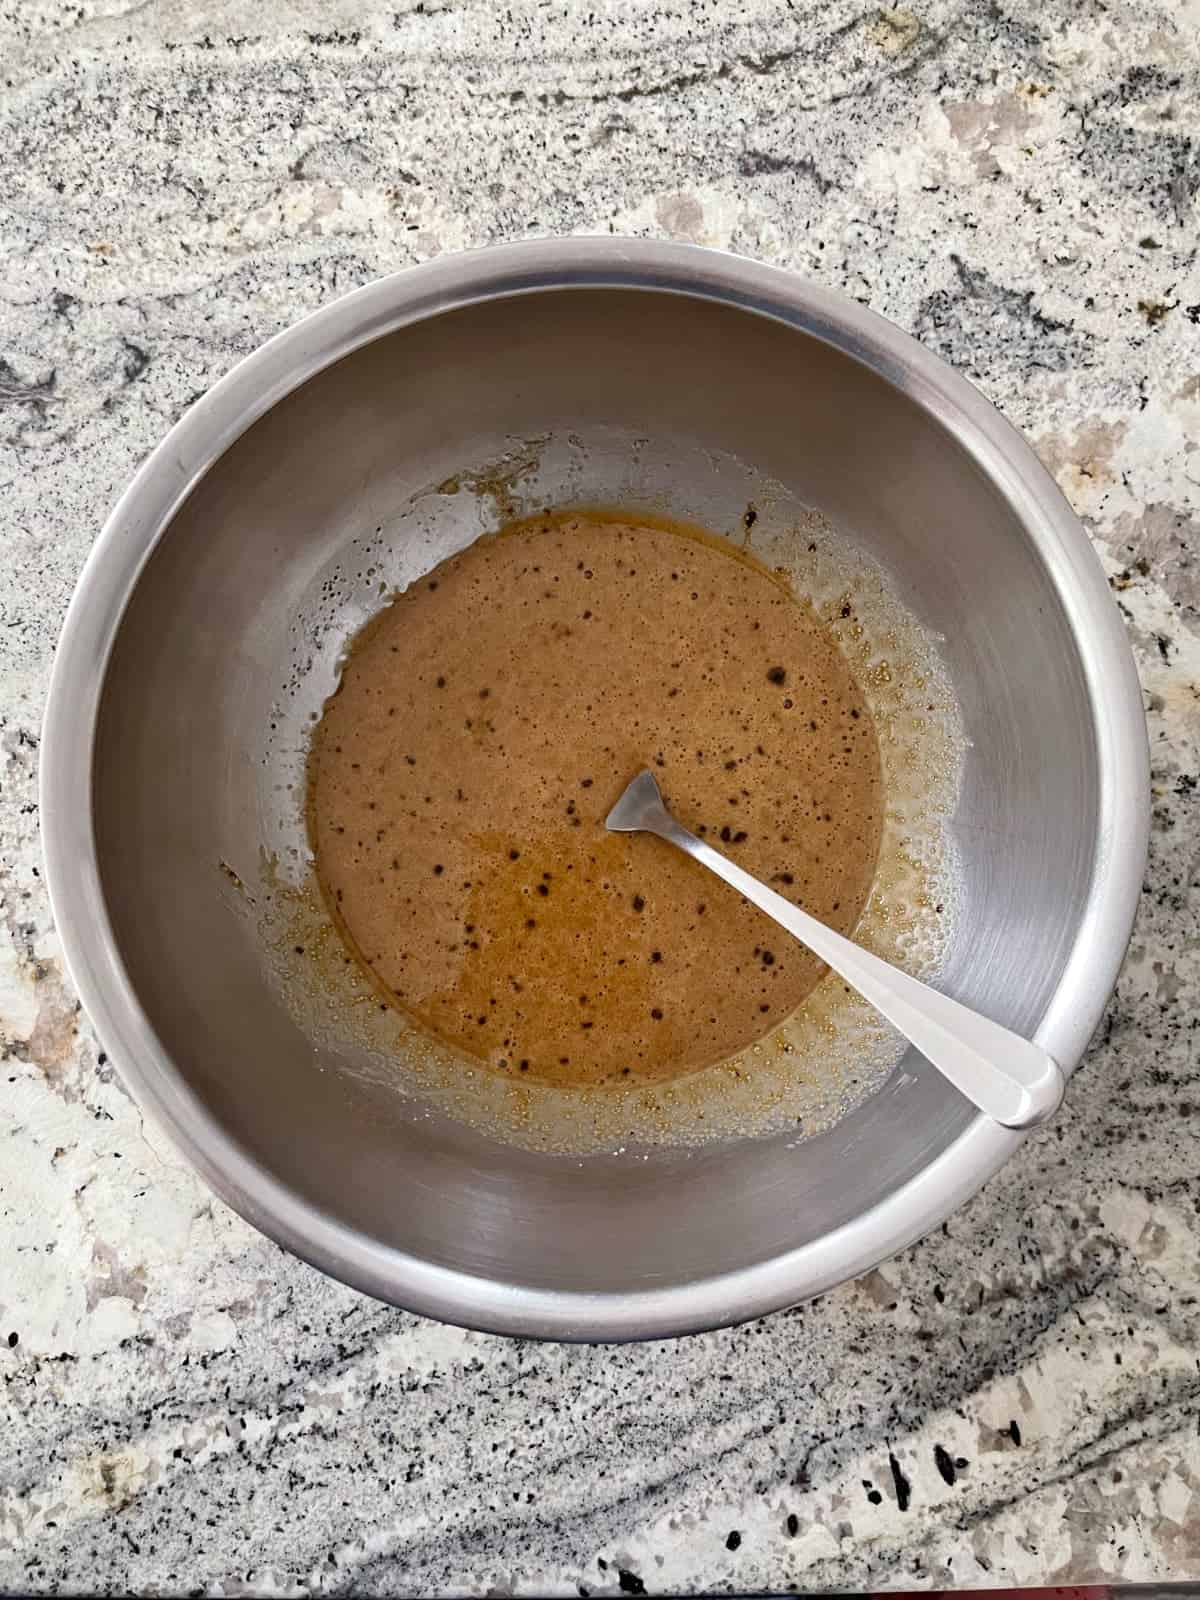 Stirring oil, eggs, Truvia, vanilla, espresso powder and salt in mixing bowl on granite counter.